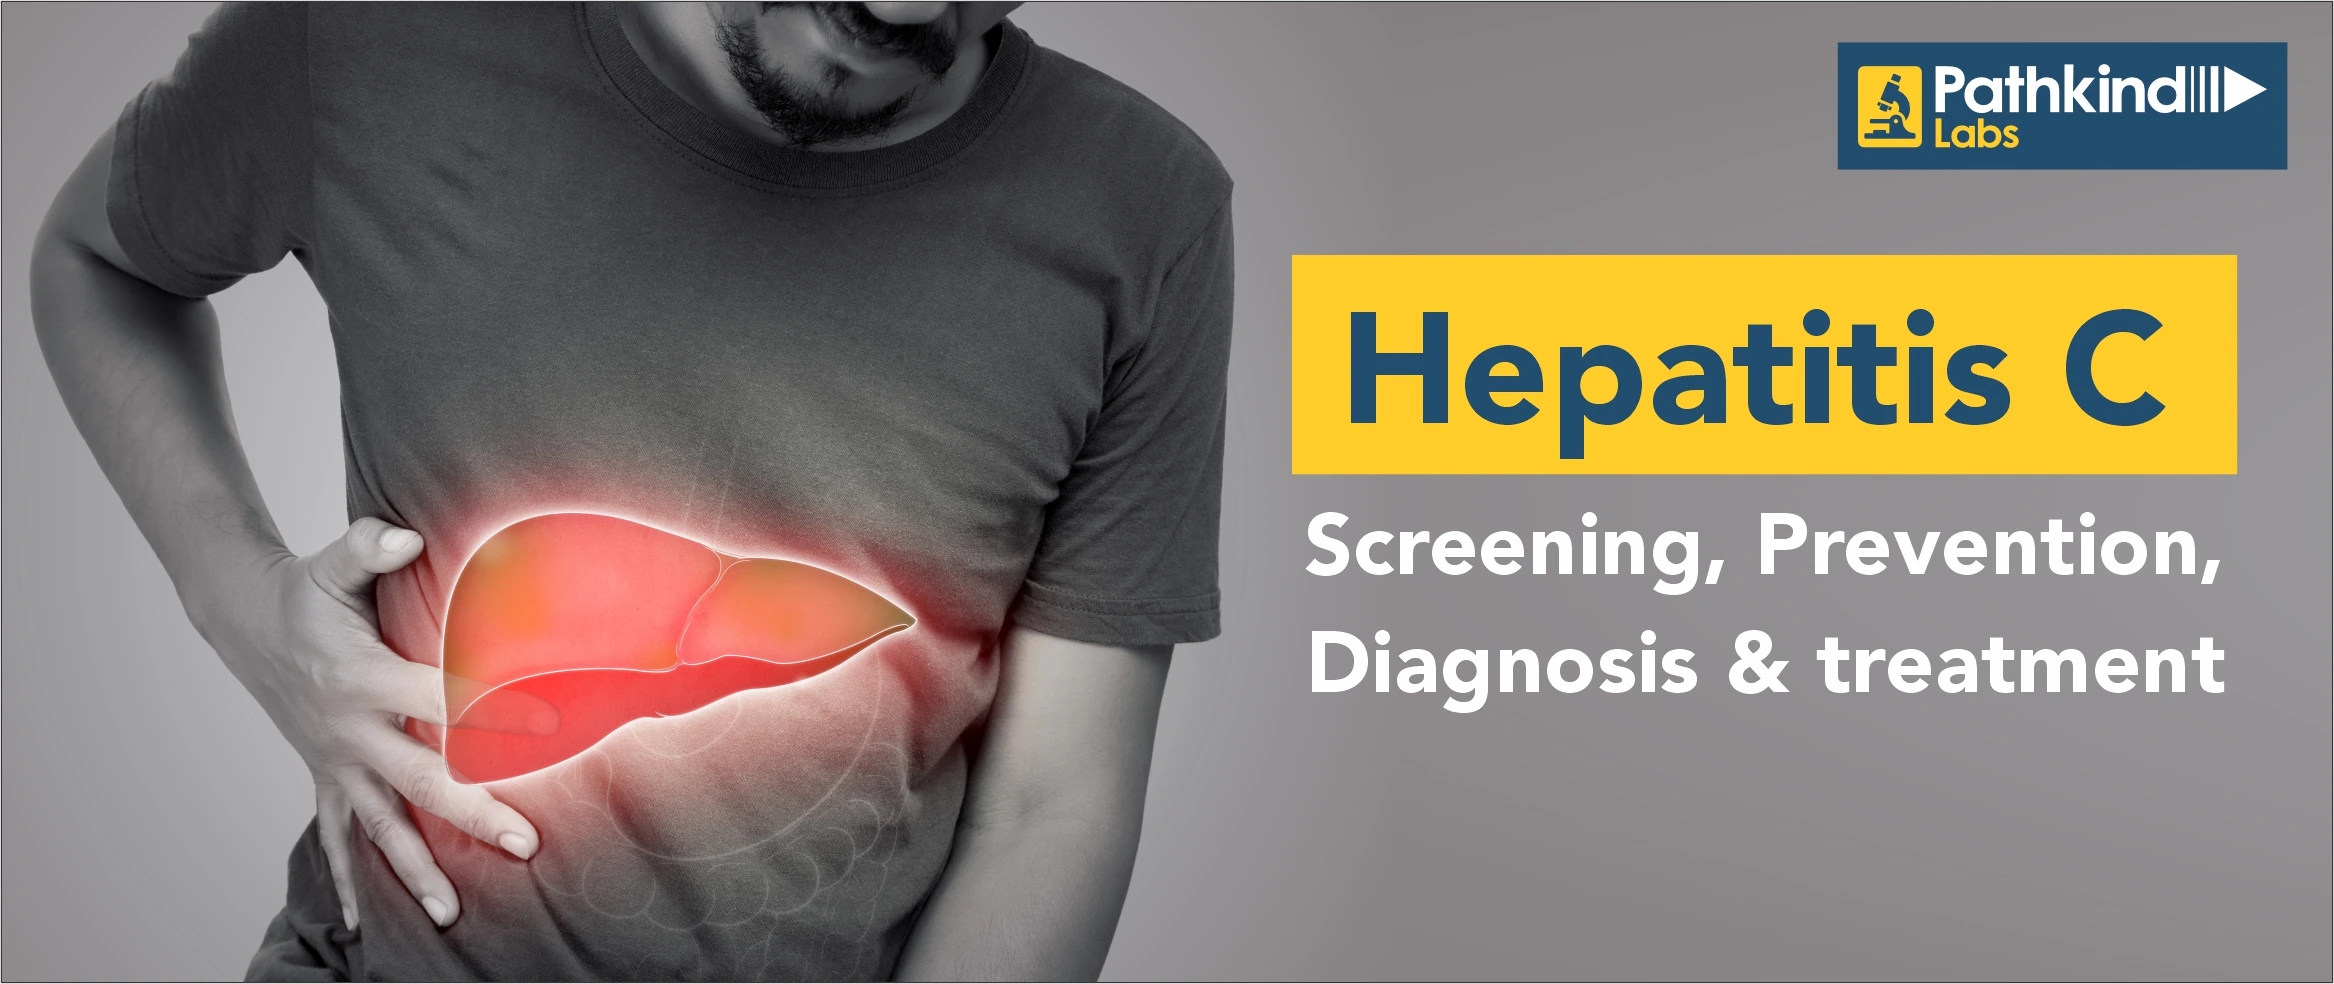 Hepatitis C- Screening, Prevention, Diagnosis & Treatment